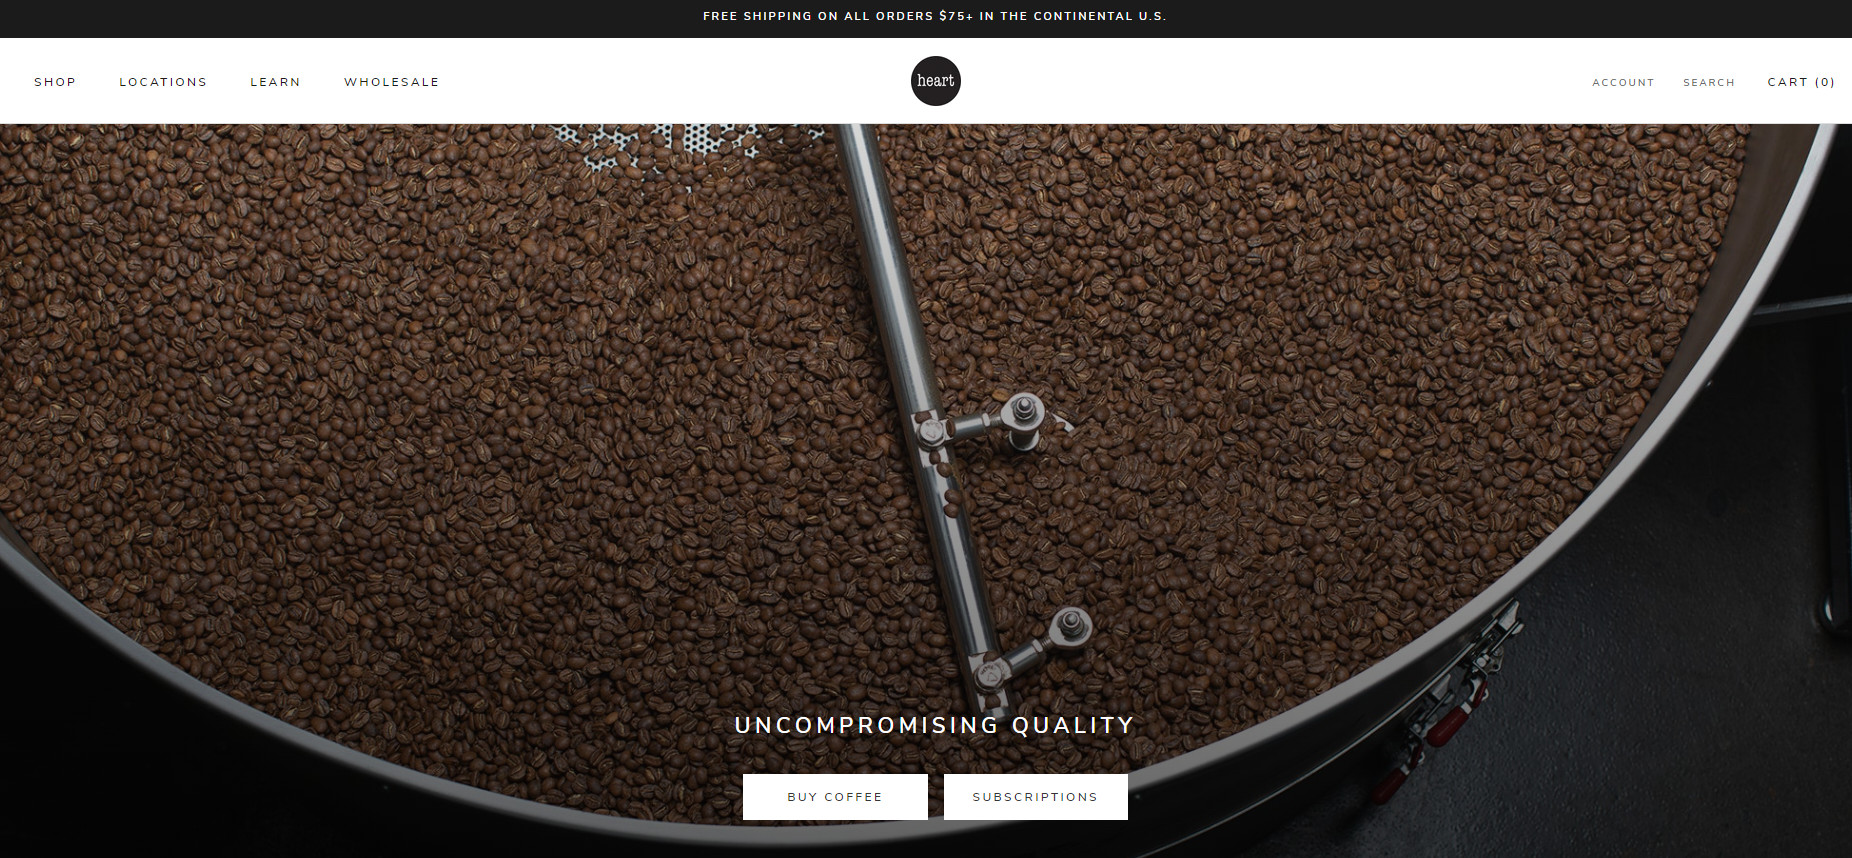 best coffee shop website example: Heart Coffee Roasters